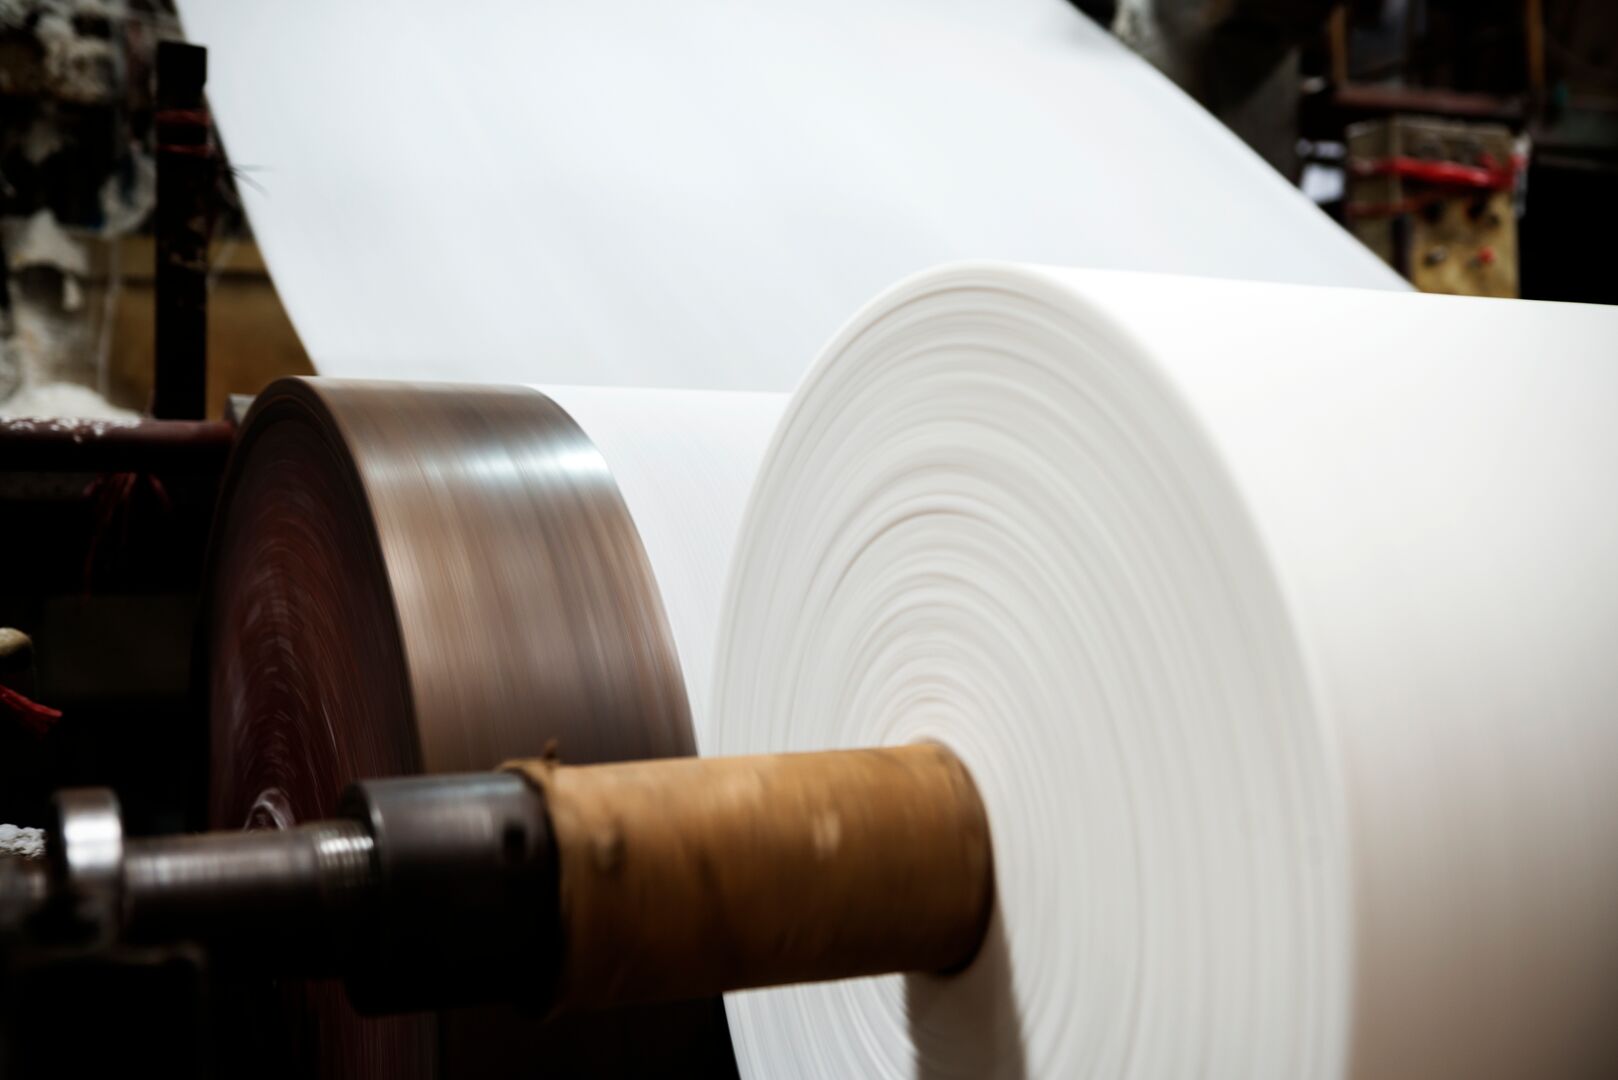 EFS_Cogeneration Paper industry_Paper roll